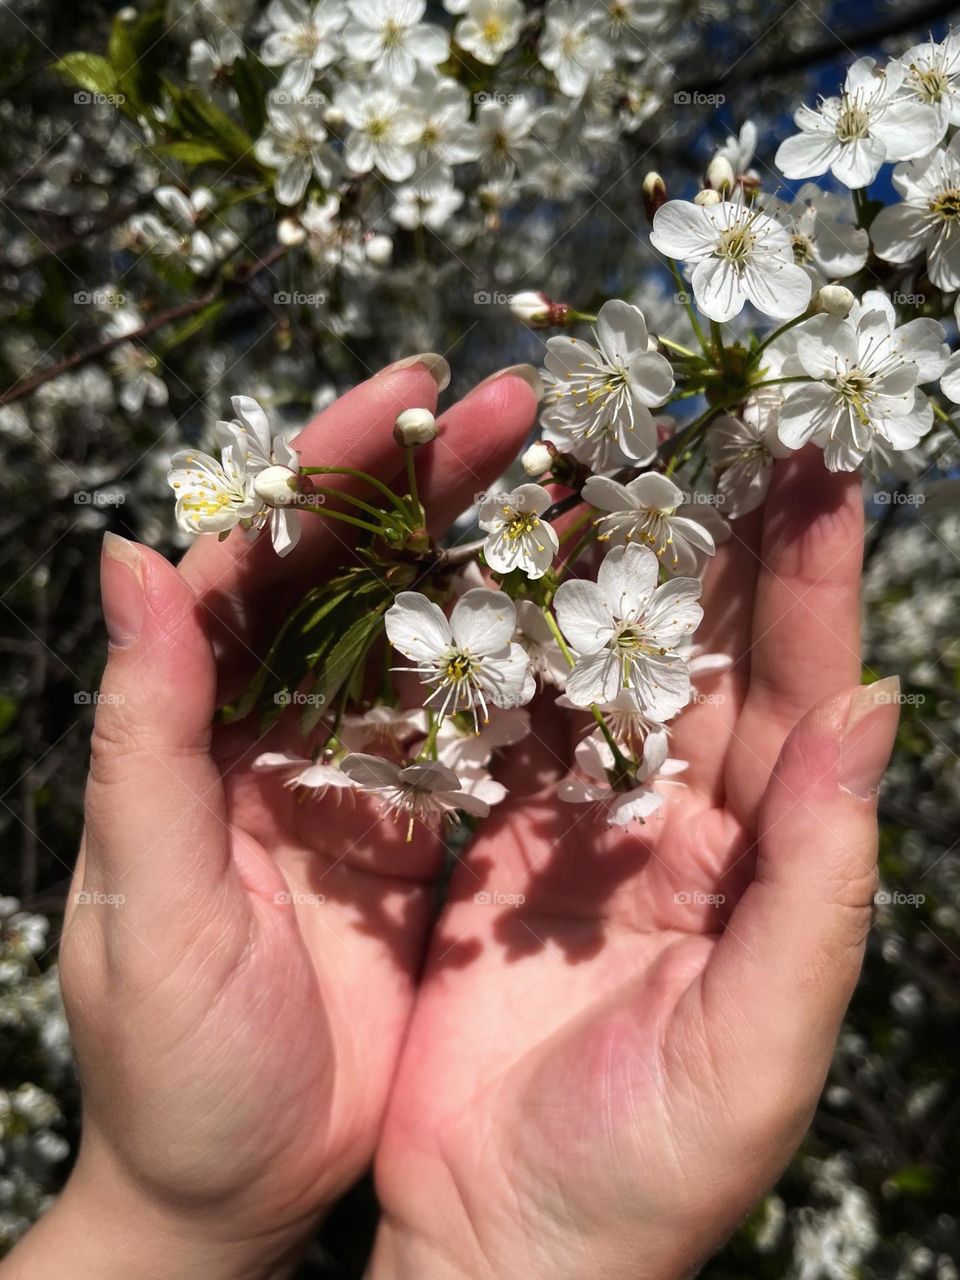 Spring floral tenderness 